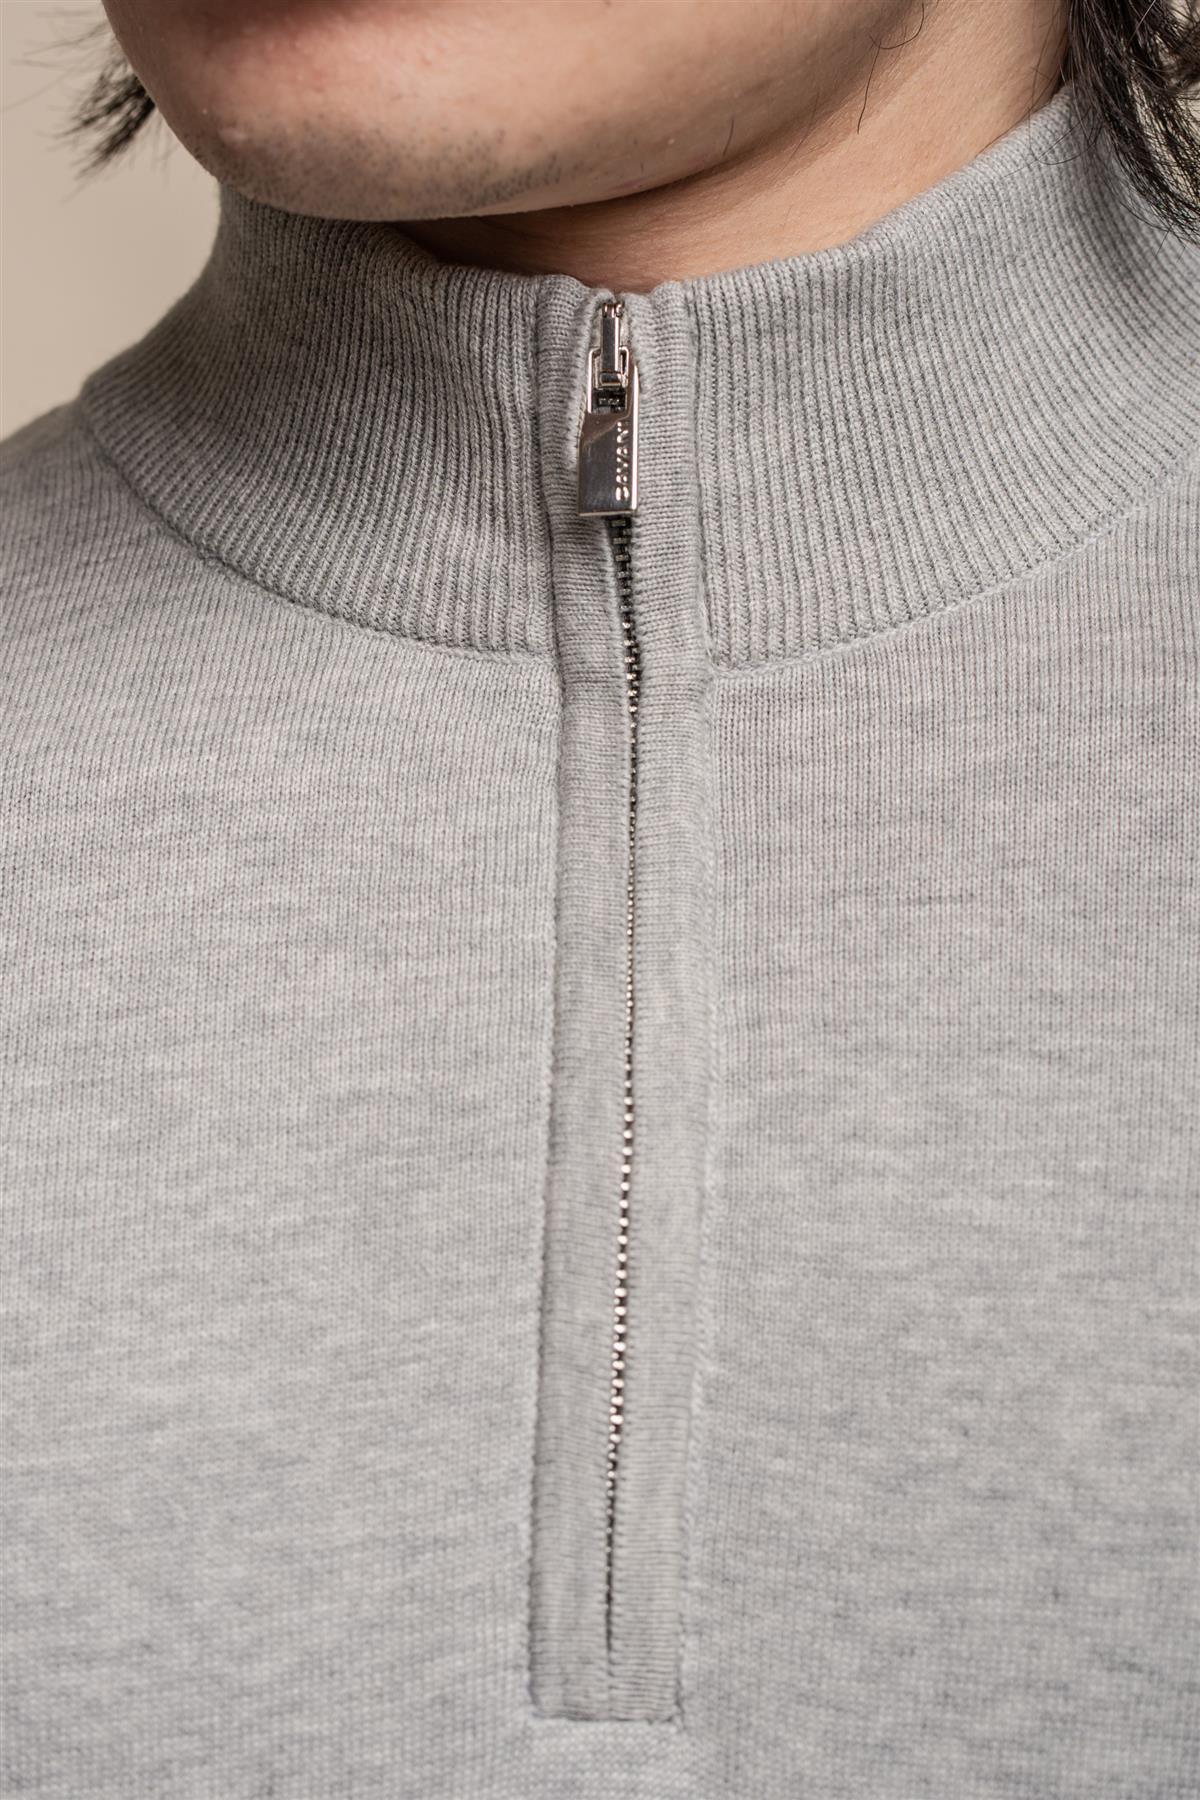 Avanti half zip grey jumper front detail